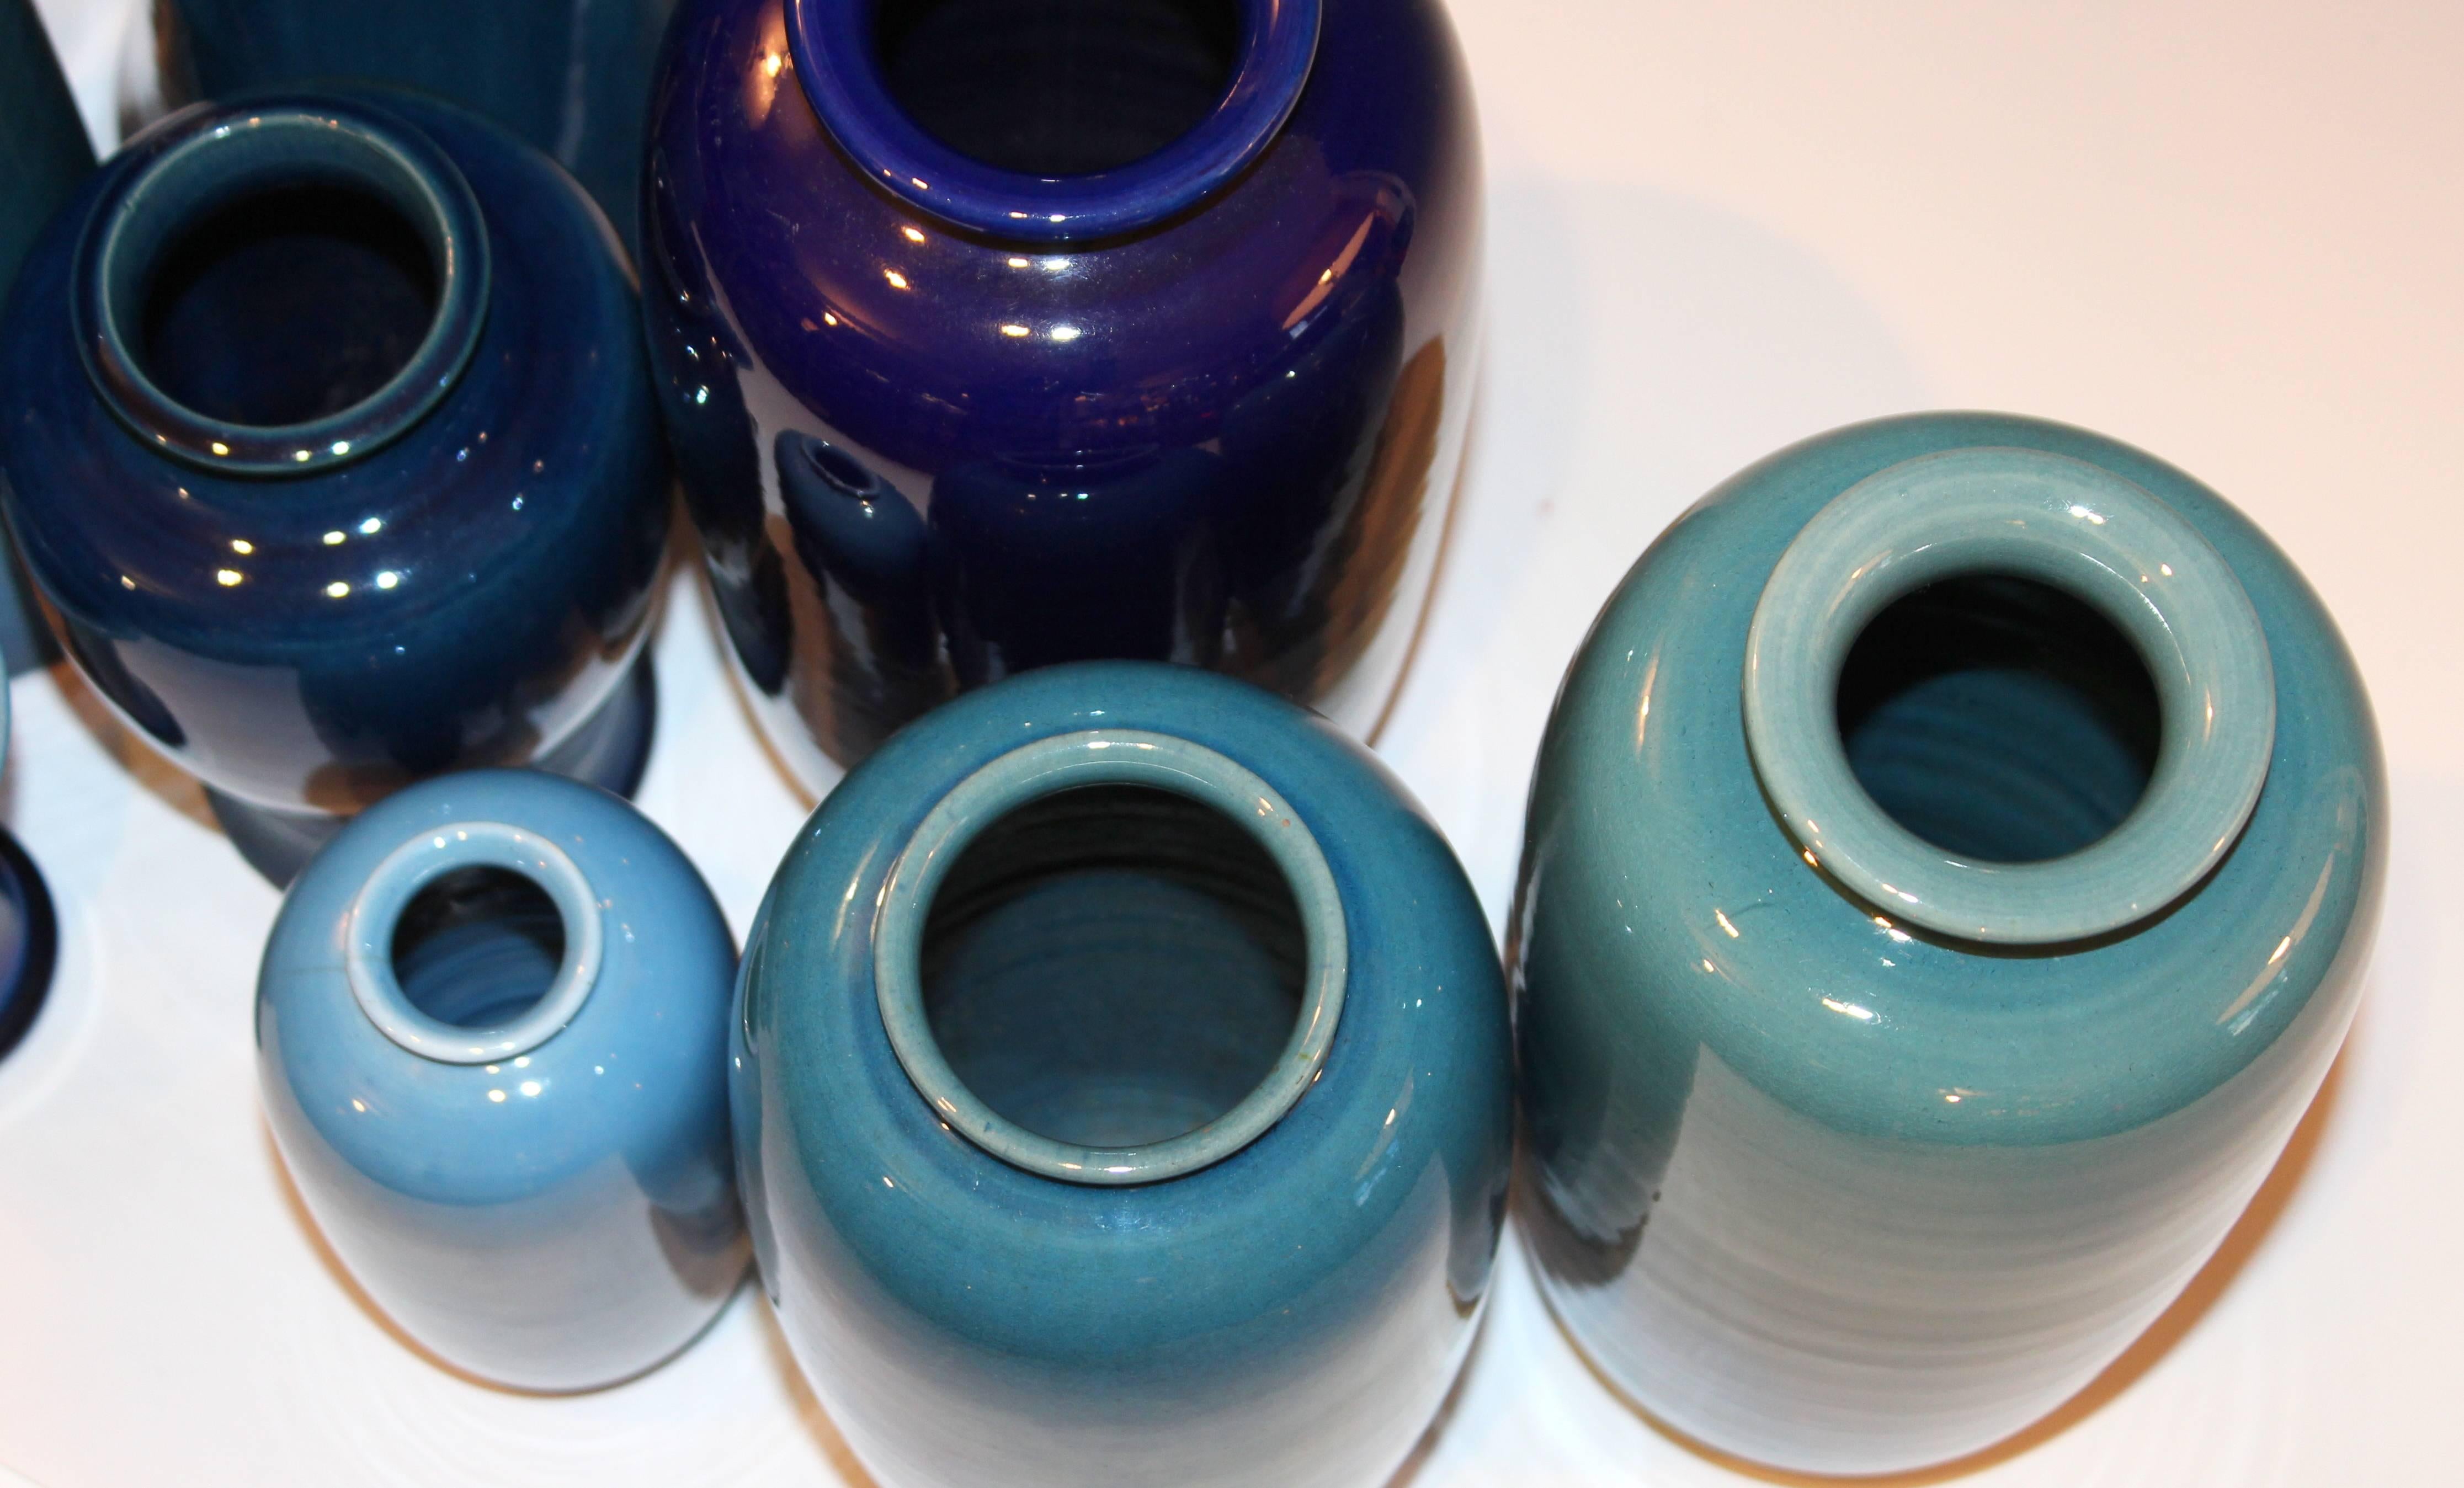 Japanese Set of Antique and Vintage Awaji Studio Pottery Vases Jars Shades of Blue